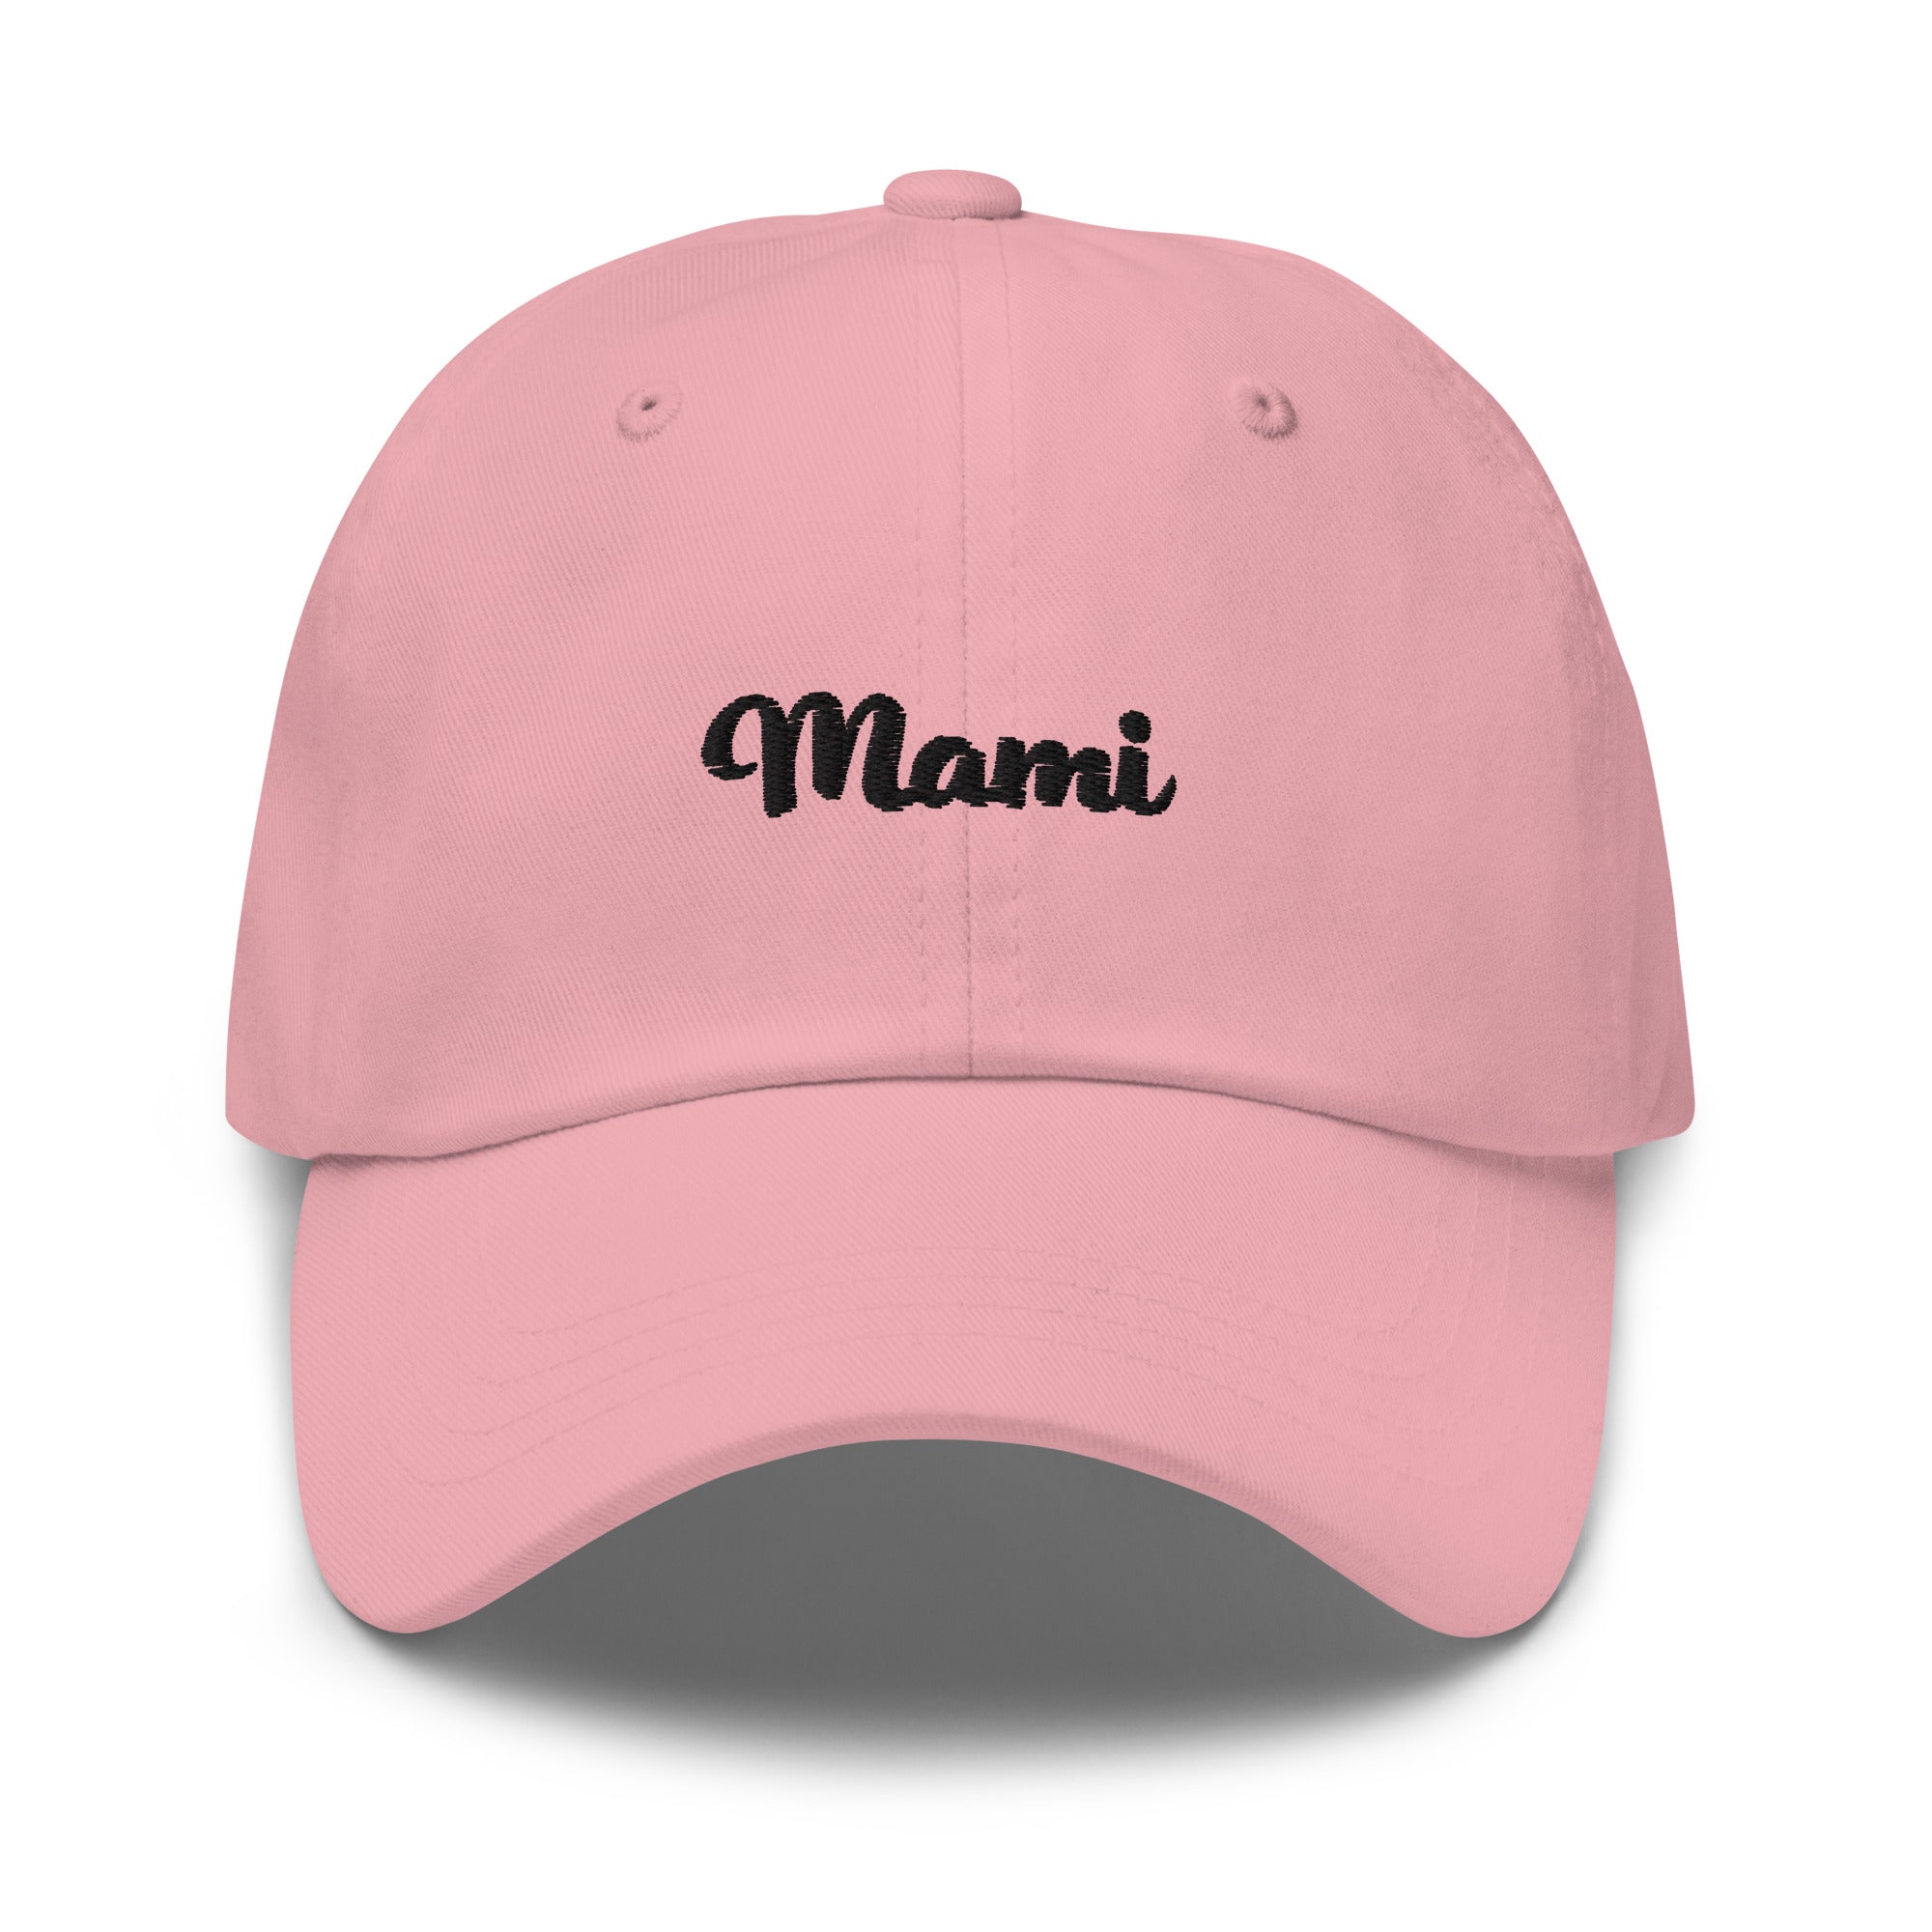 AGAD Summer 24 (Mami) hat